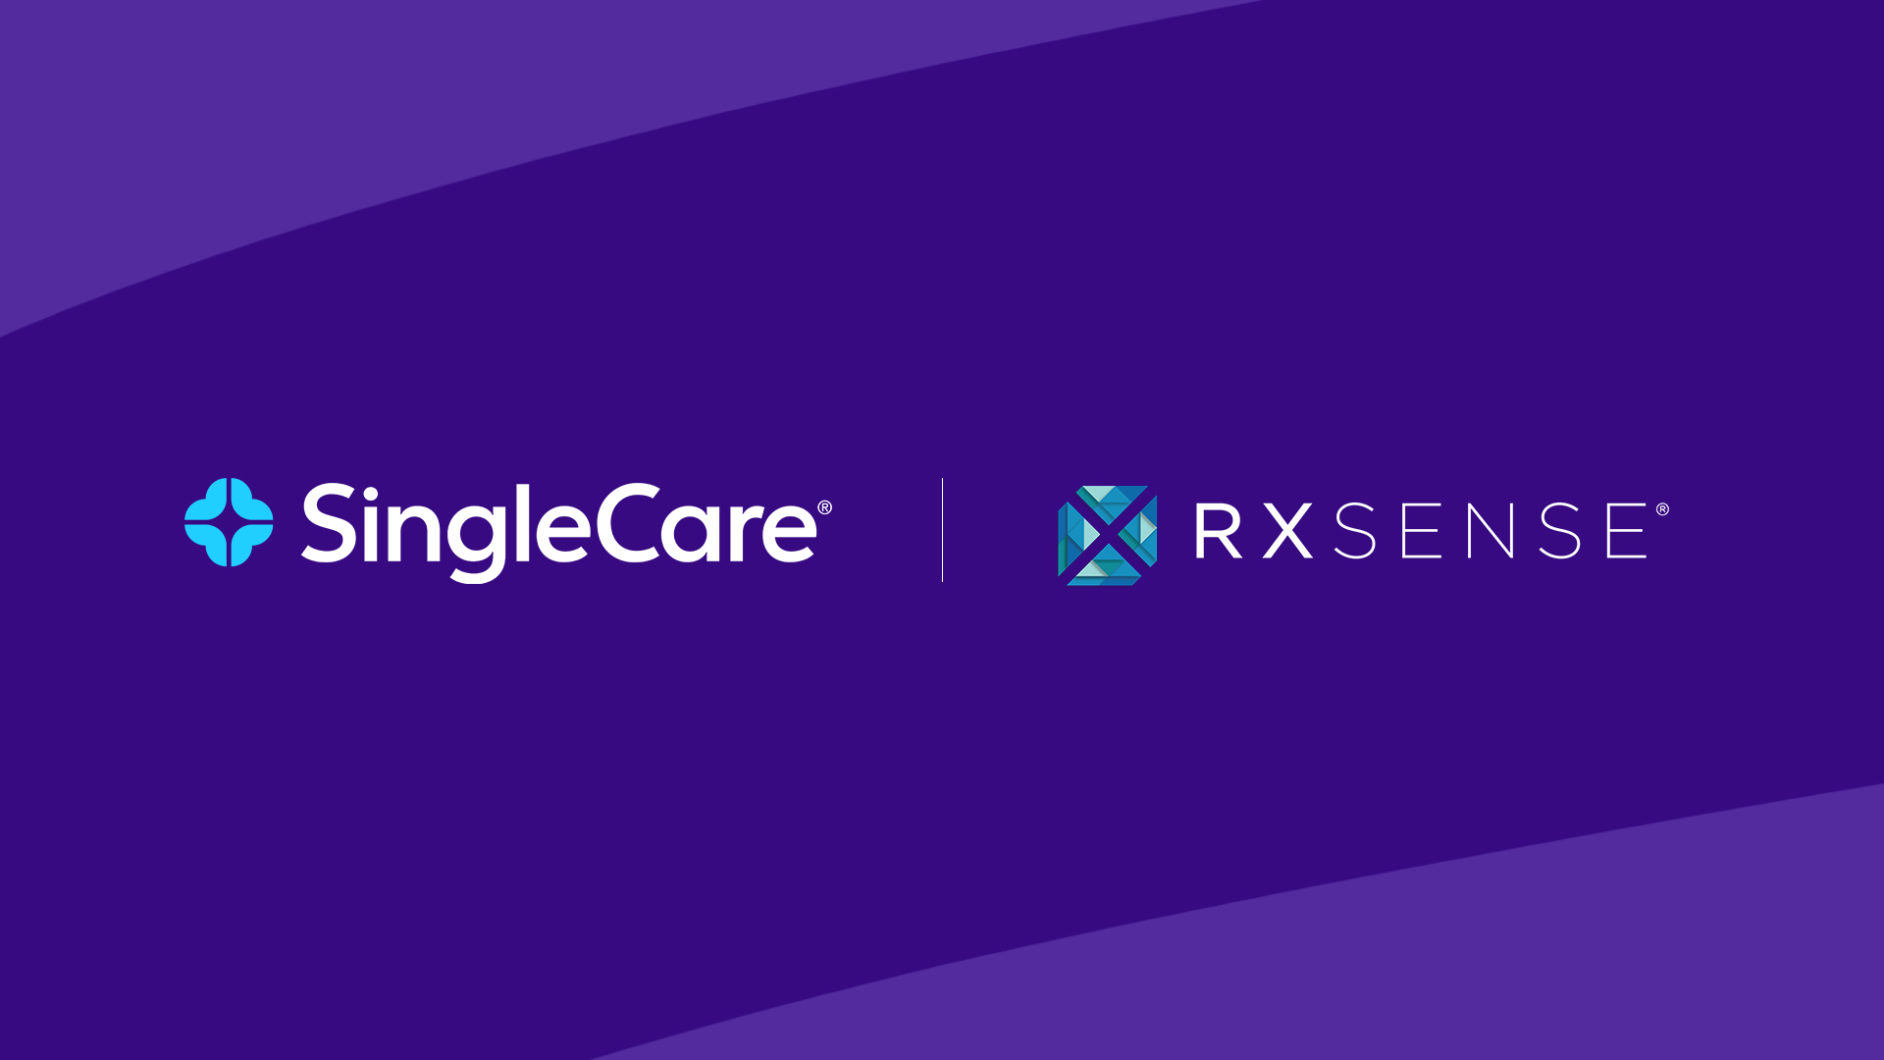 SingleCare and RxSense logos